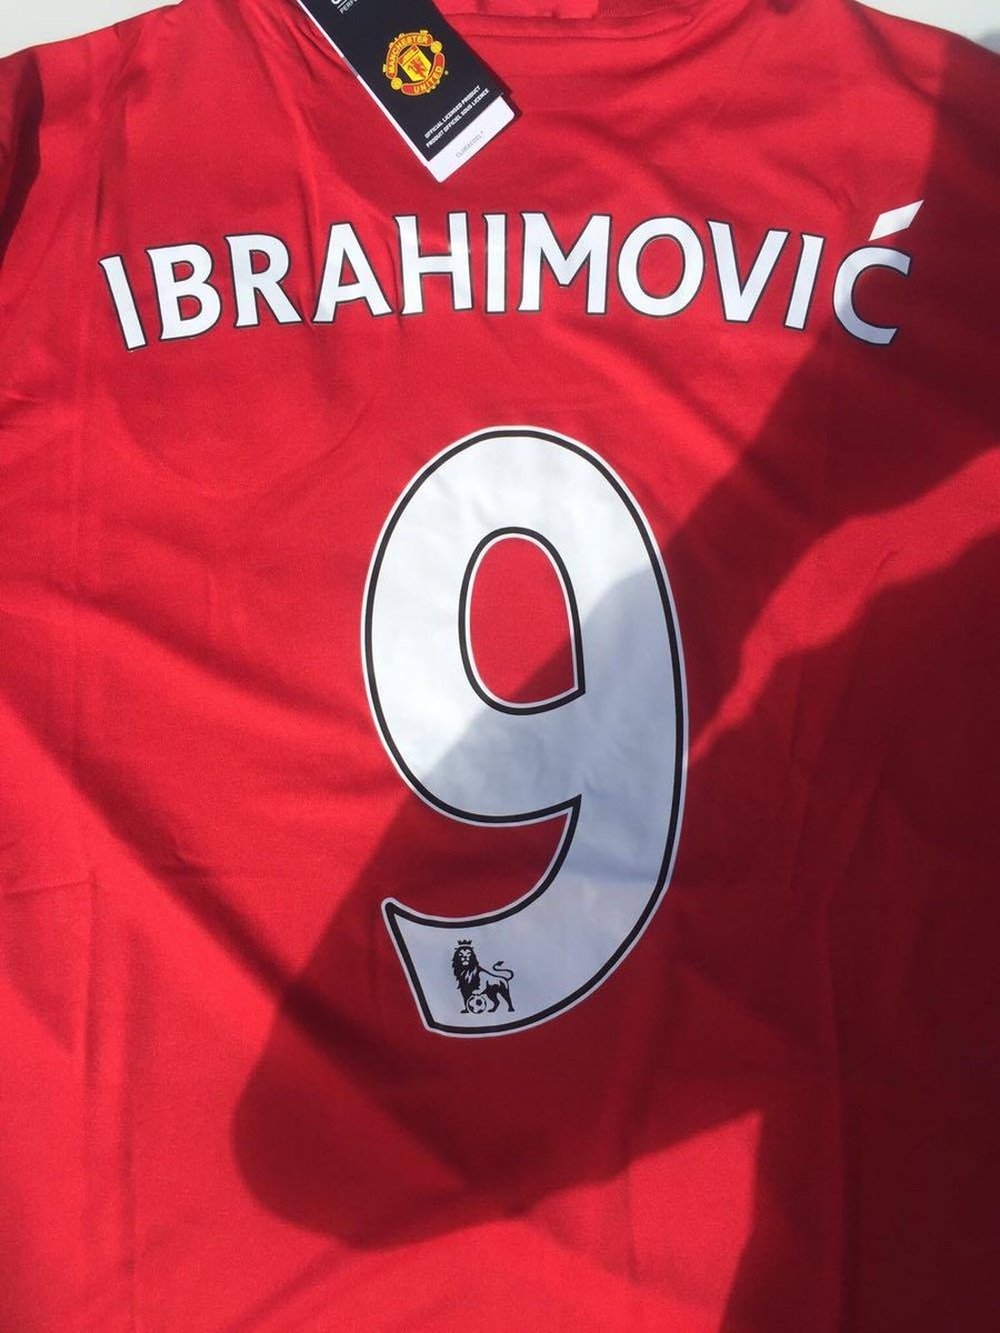 Zlatan Ibrahimovic ya ha desembarcado en el Manchester United. Twitter